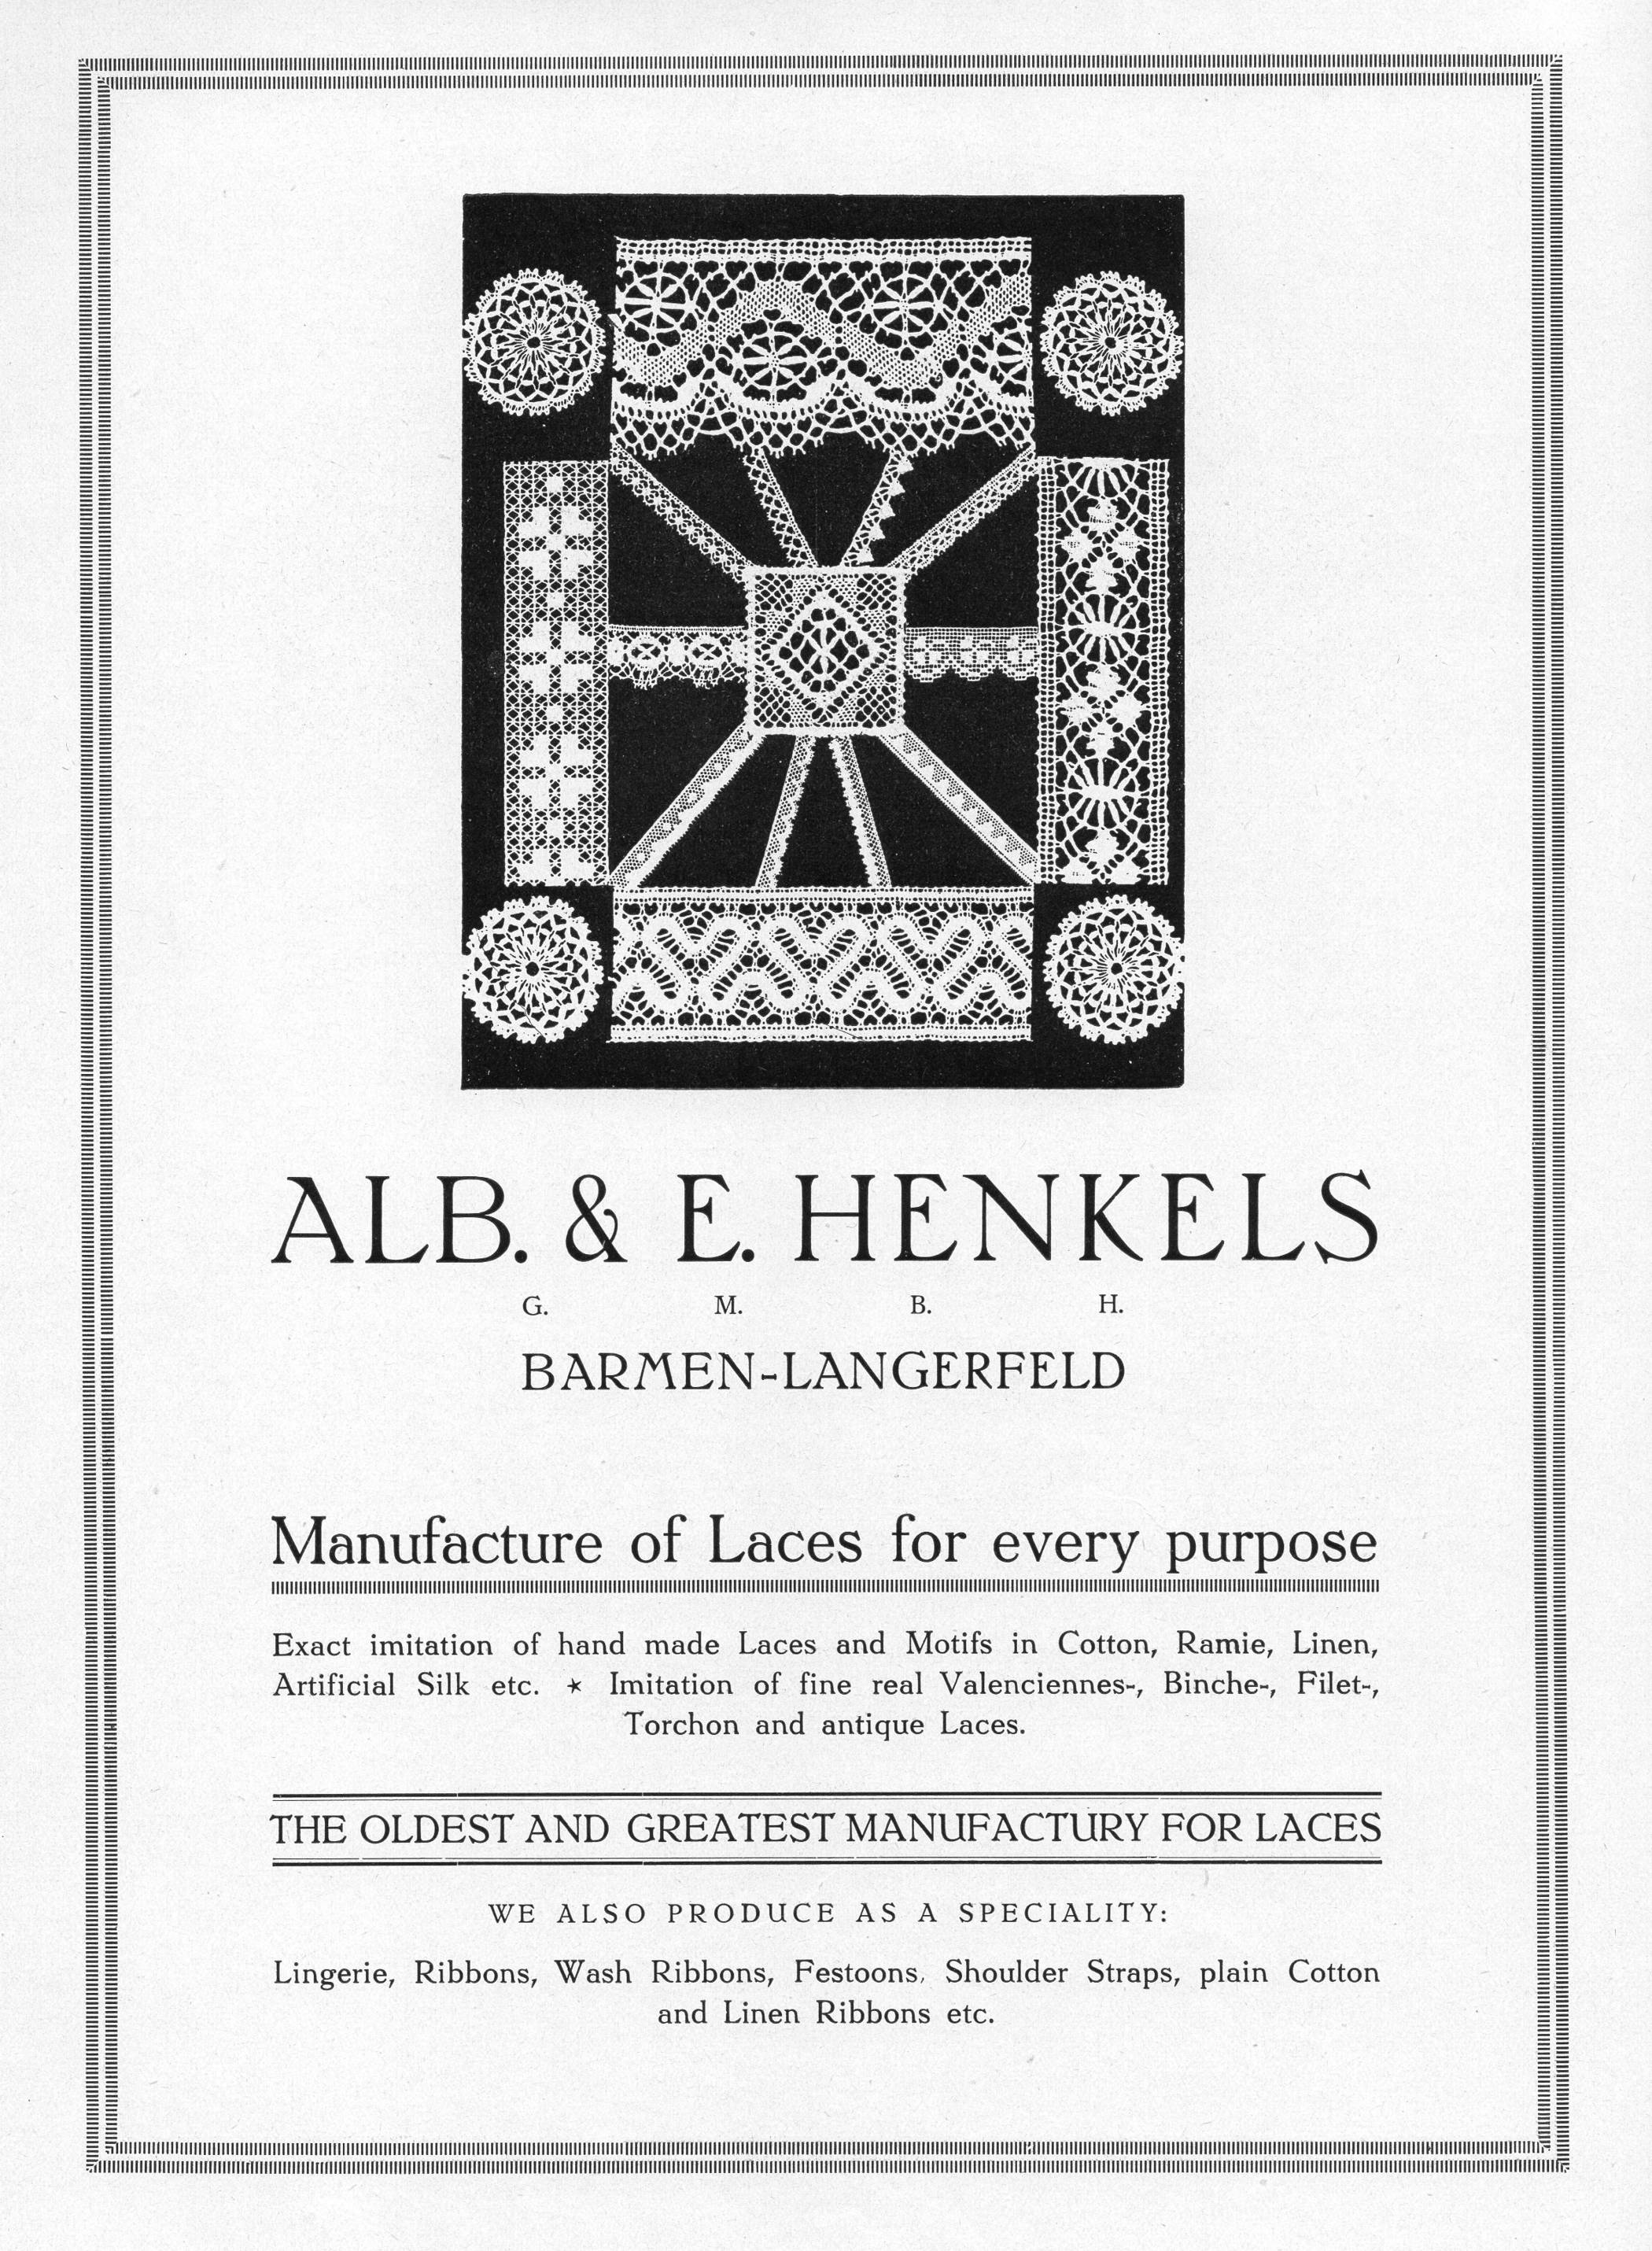 Alb. &amp; E. Henkels - Werbung 1926, englischer...